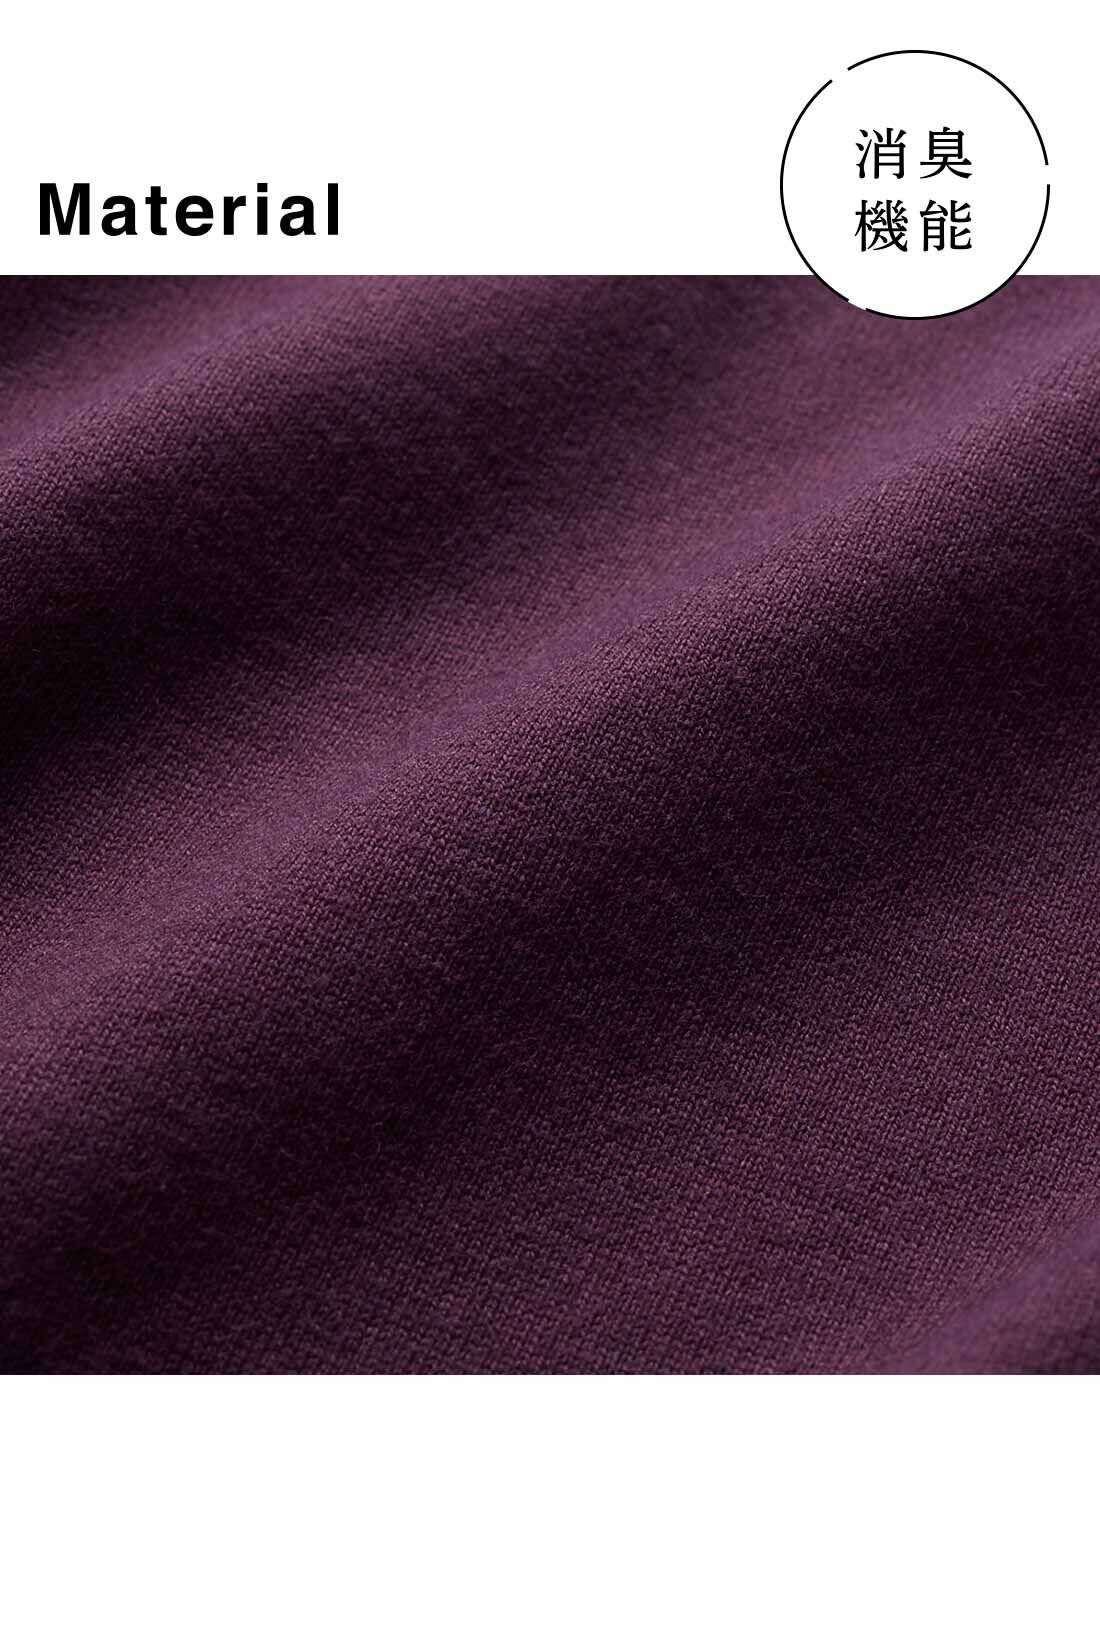 IEDIT|IEDIT[イディット]　消臭機能×コットン100％ 袖スリットデザイントップス〈パープル〉|天然繊維ながら汗のにおいを減少させる消臭機能素材。 ※お届けするカラーとは異なります。